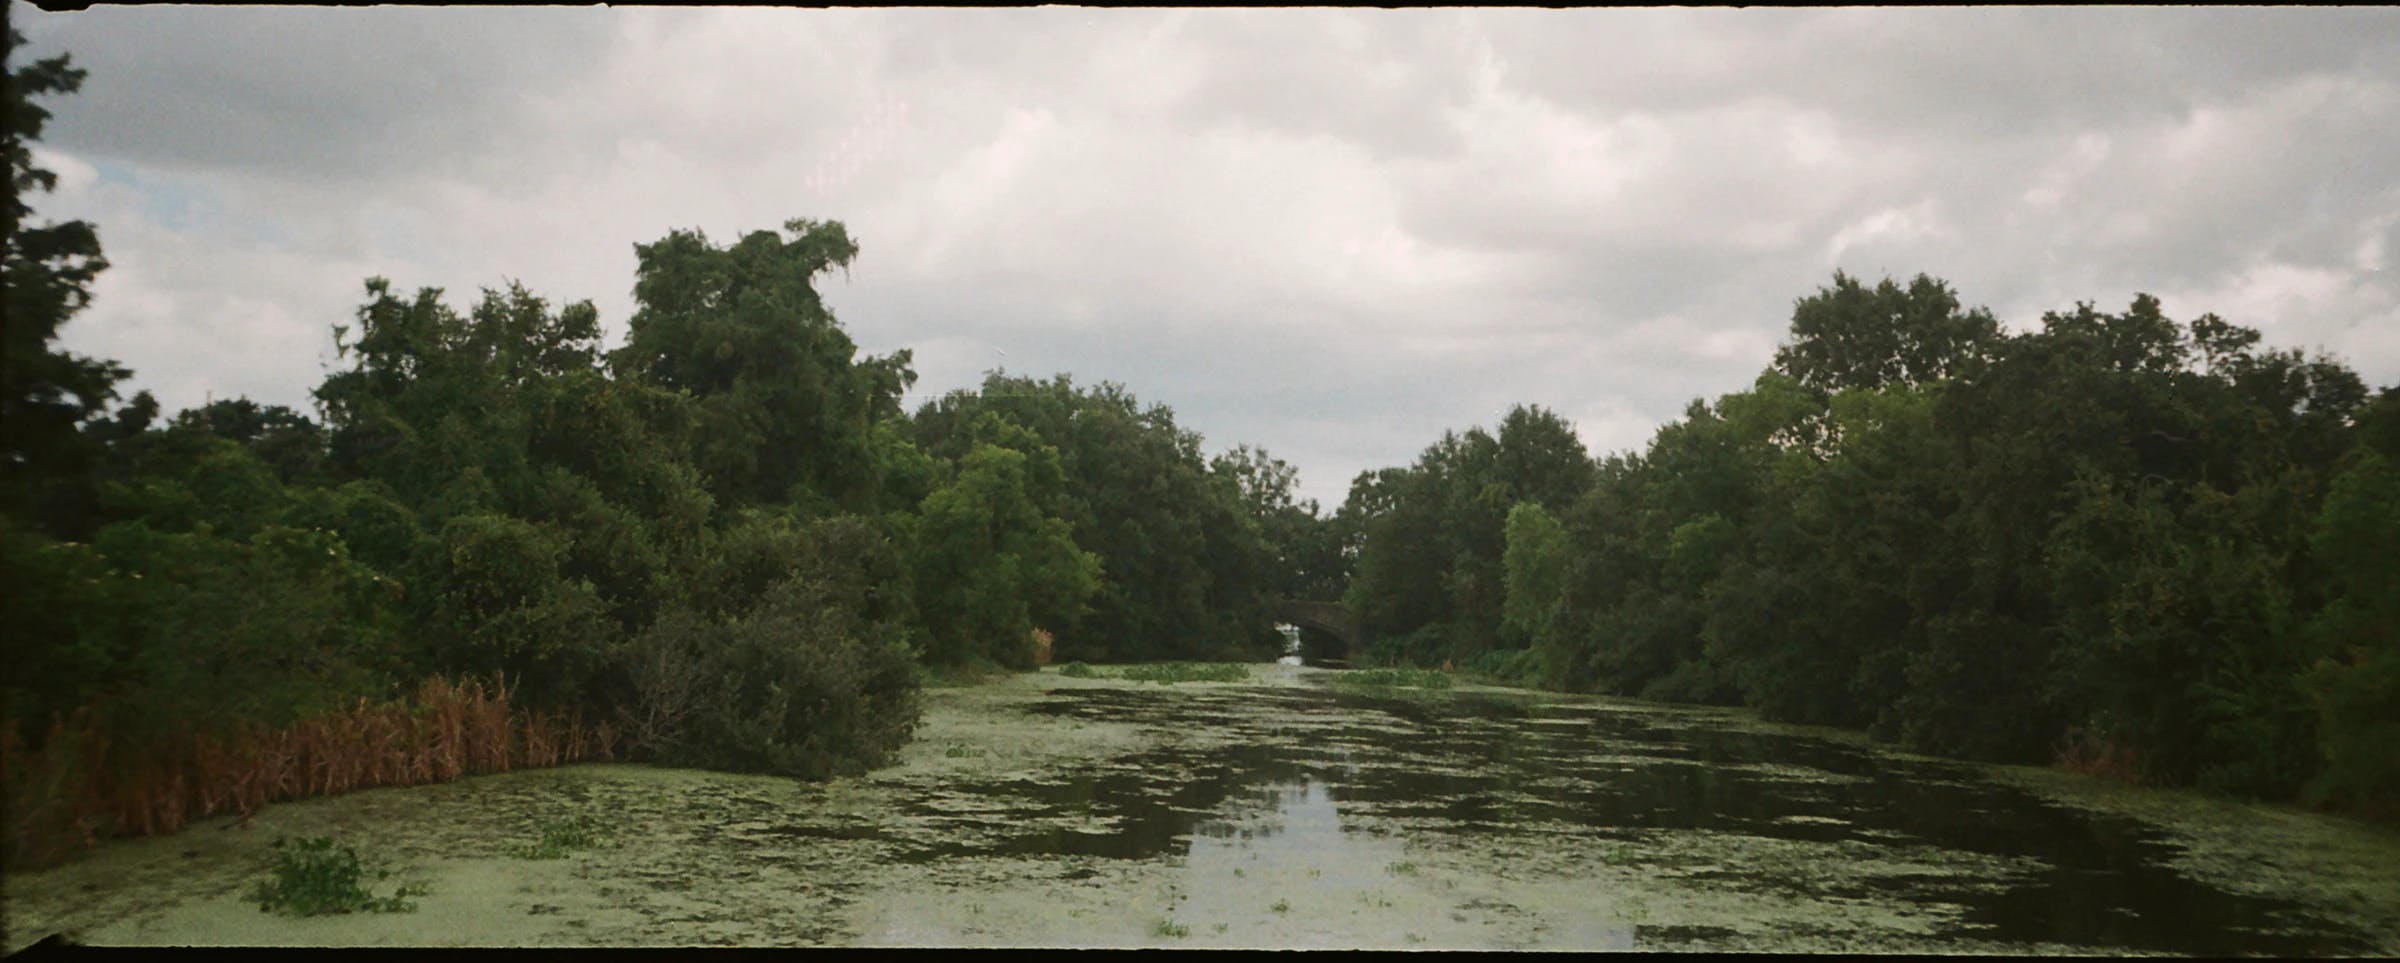 Swamp Greenery